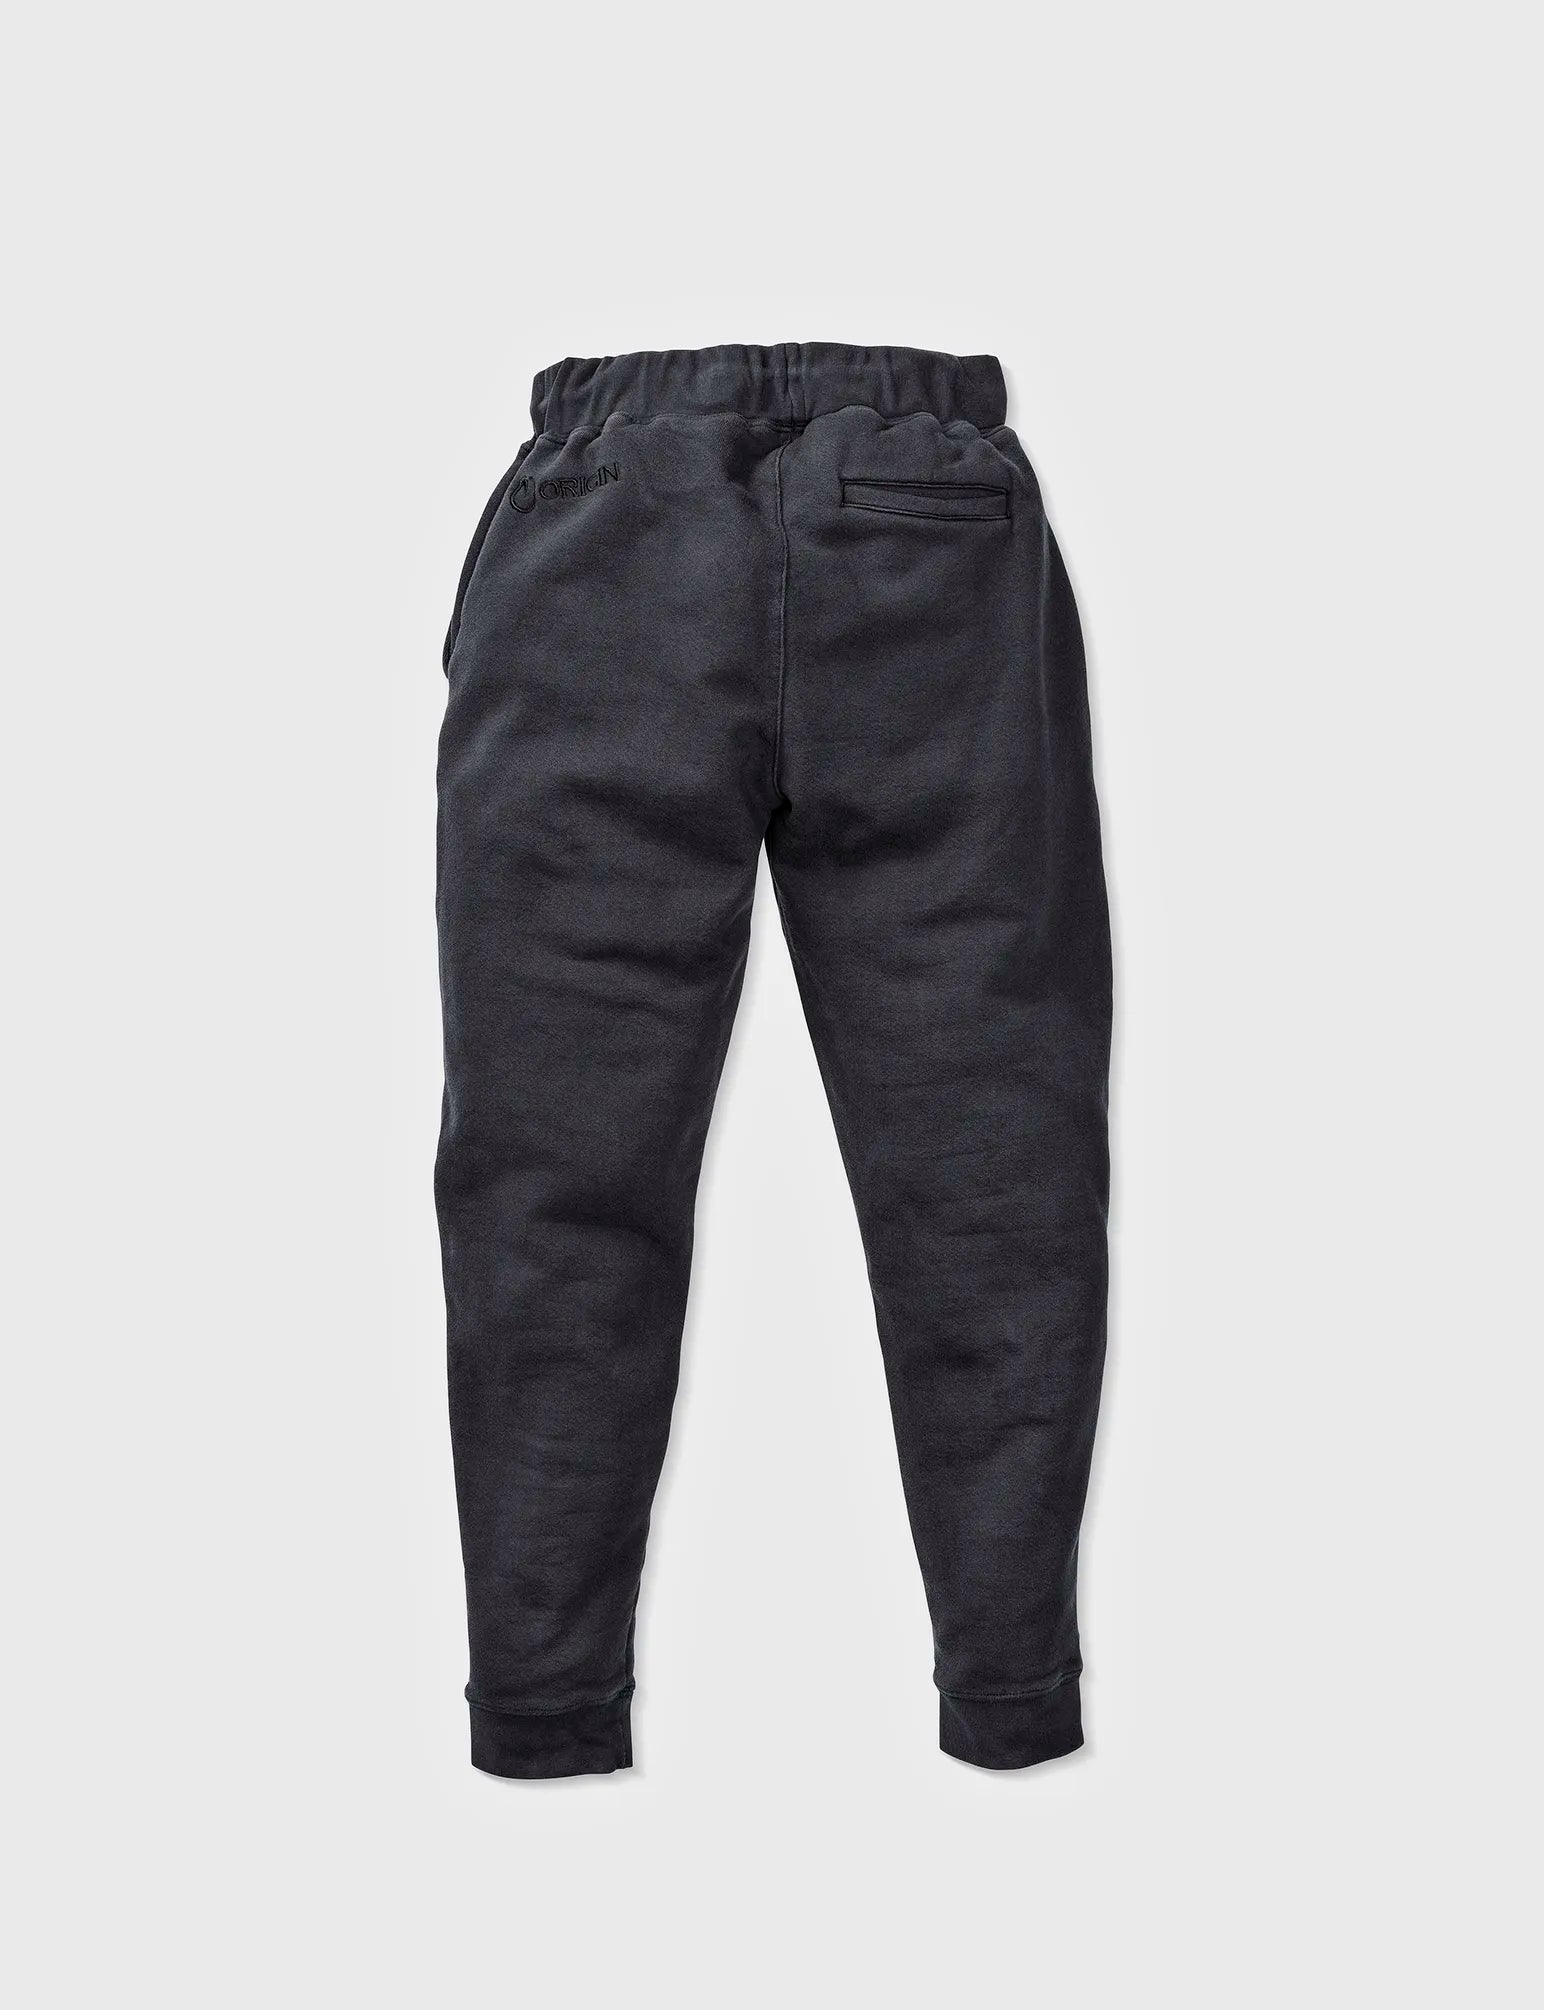 American-made Pants, Shorts, Leggins, Joggers – ORIGIN